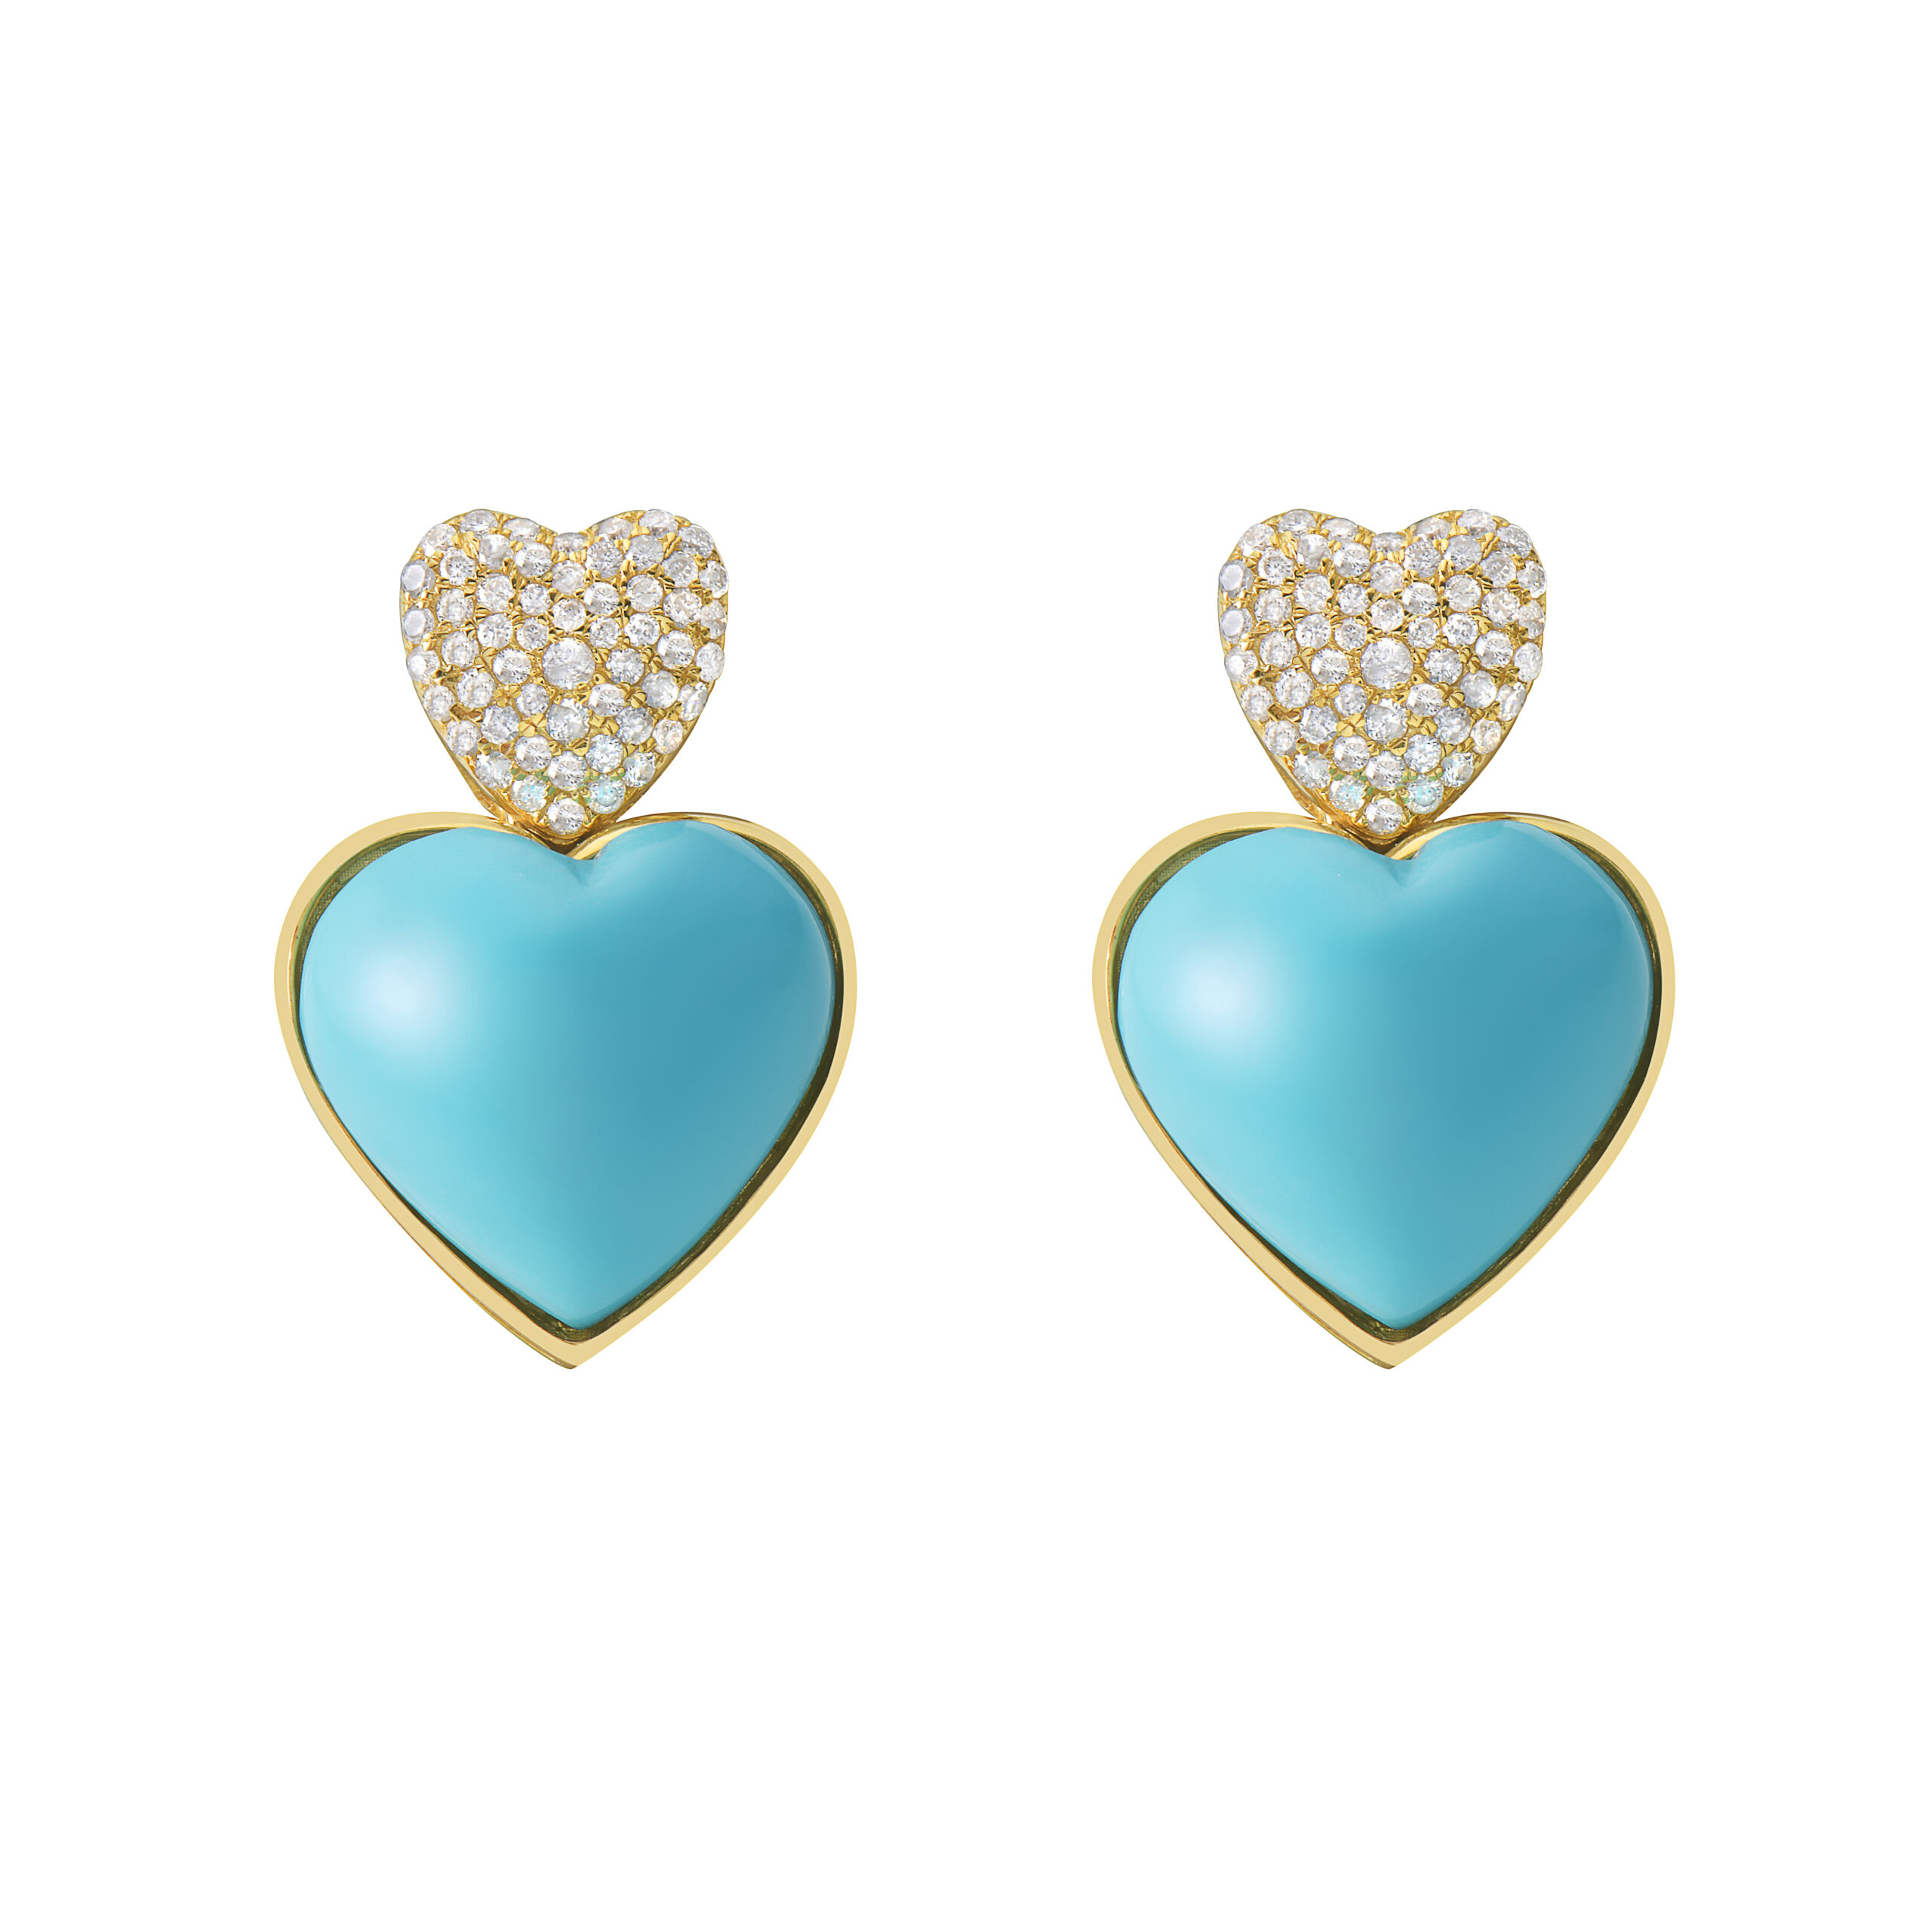 Aria Heart Earrings Earrings With Pavé Set Diamonds And Turquoise